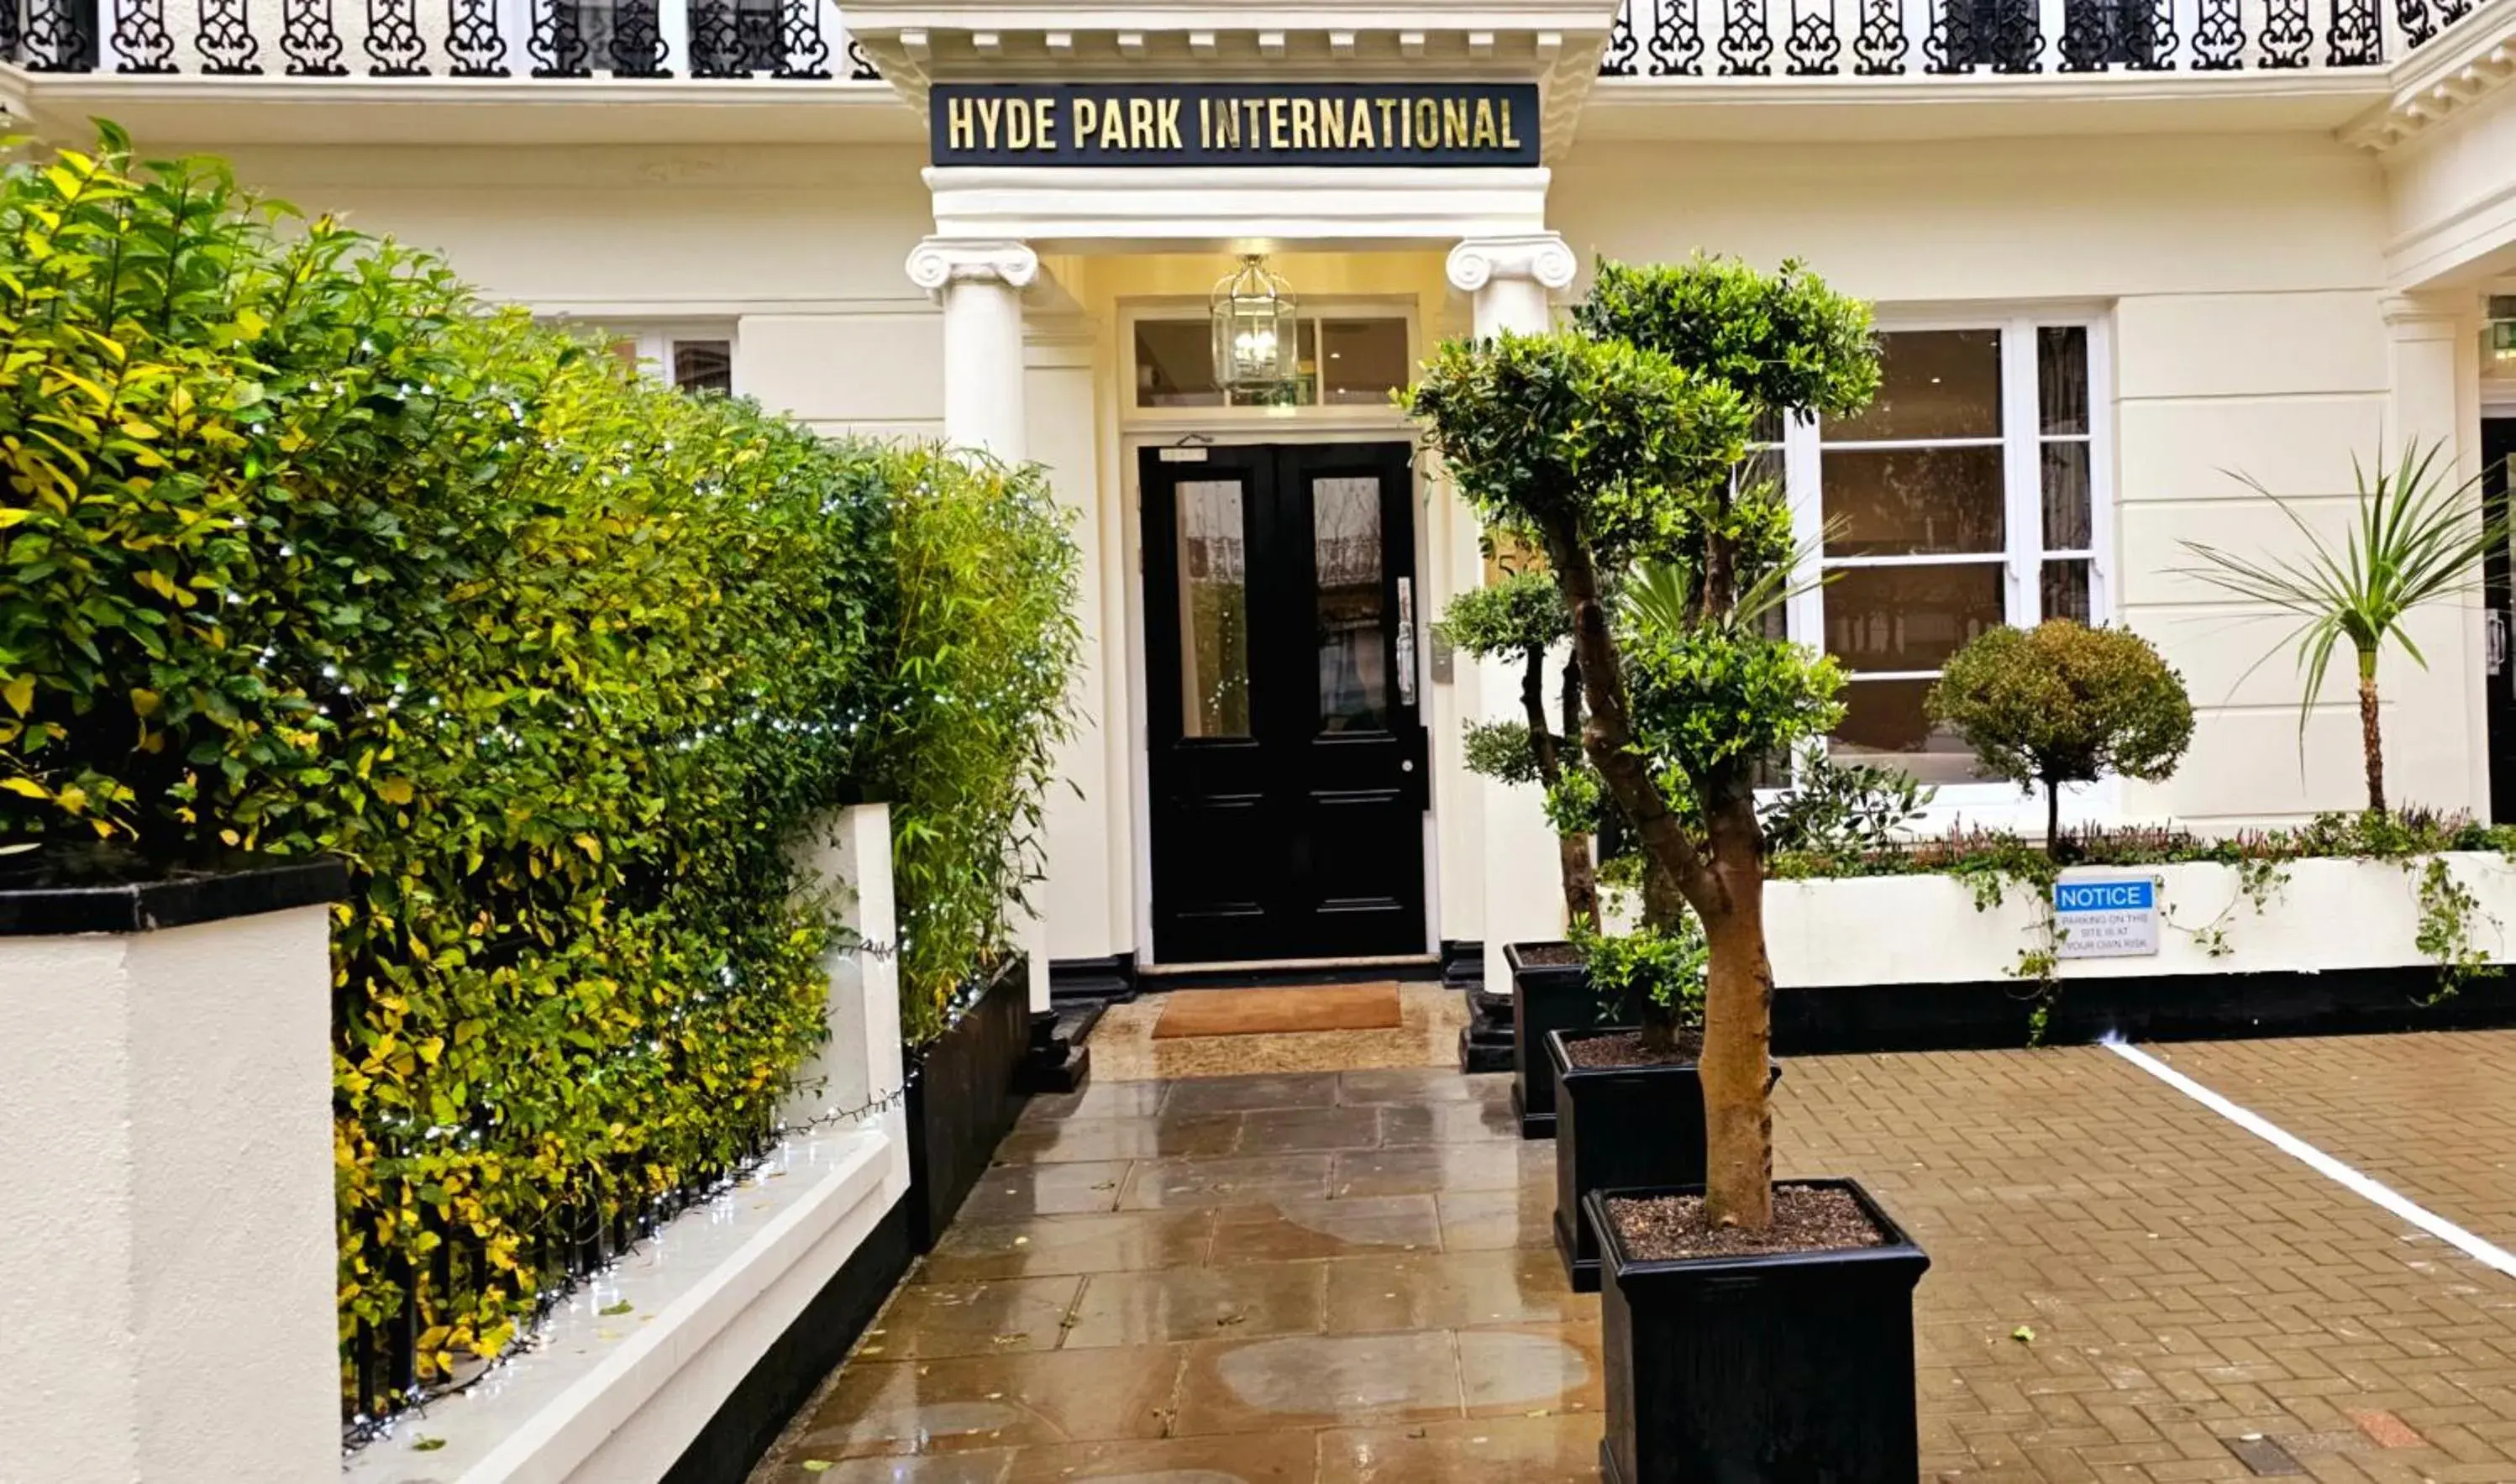 Hyde Park International - Member of Park Grand London